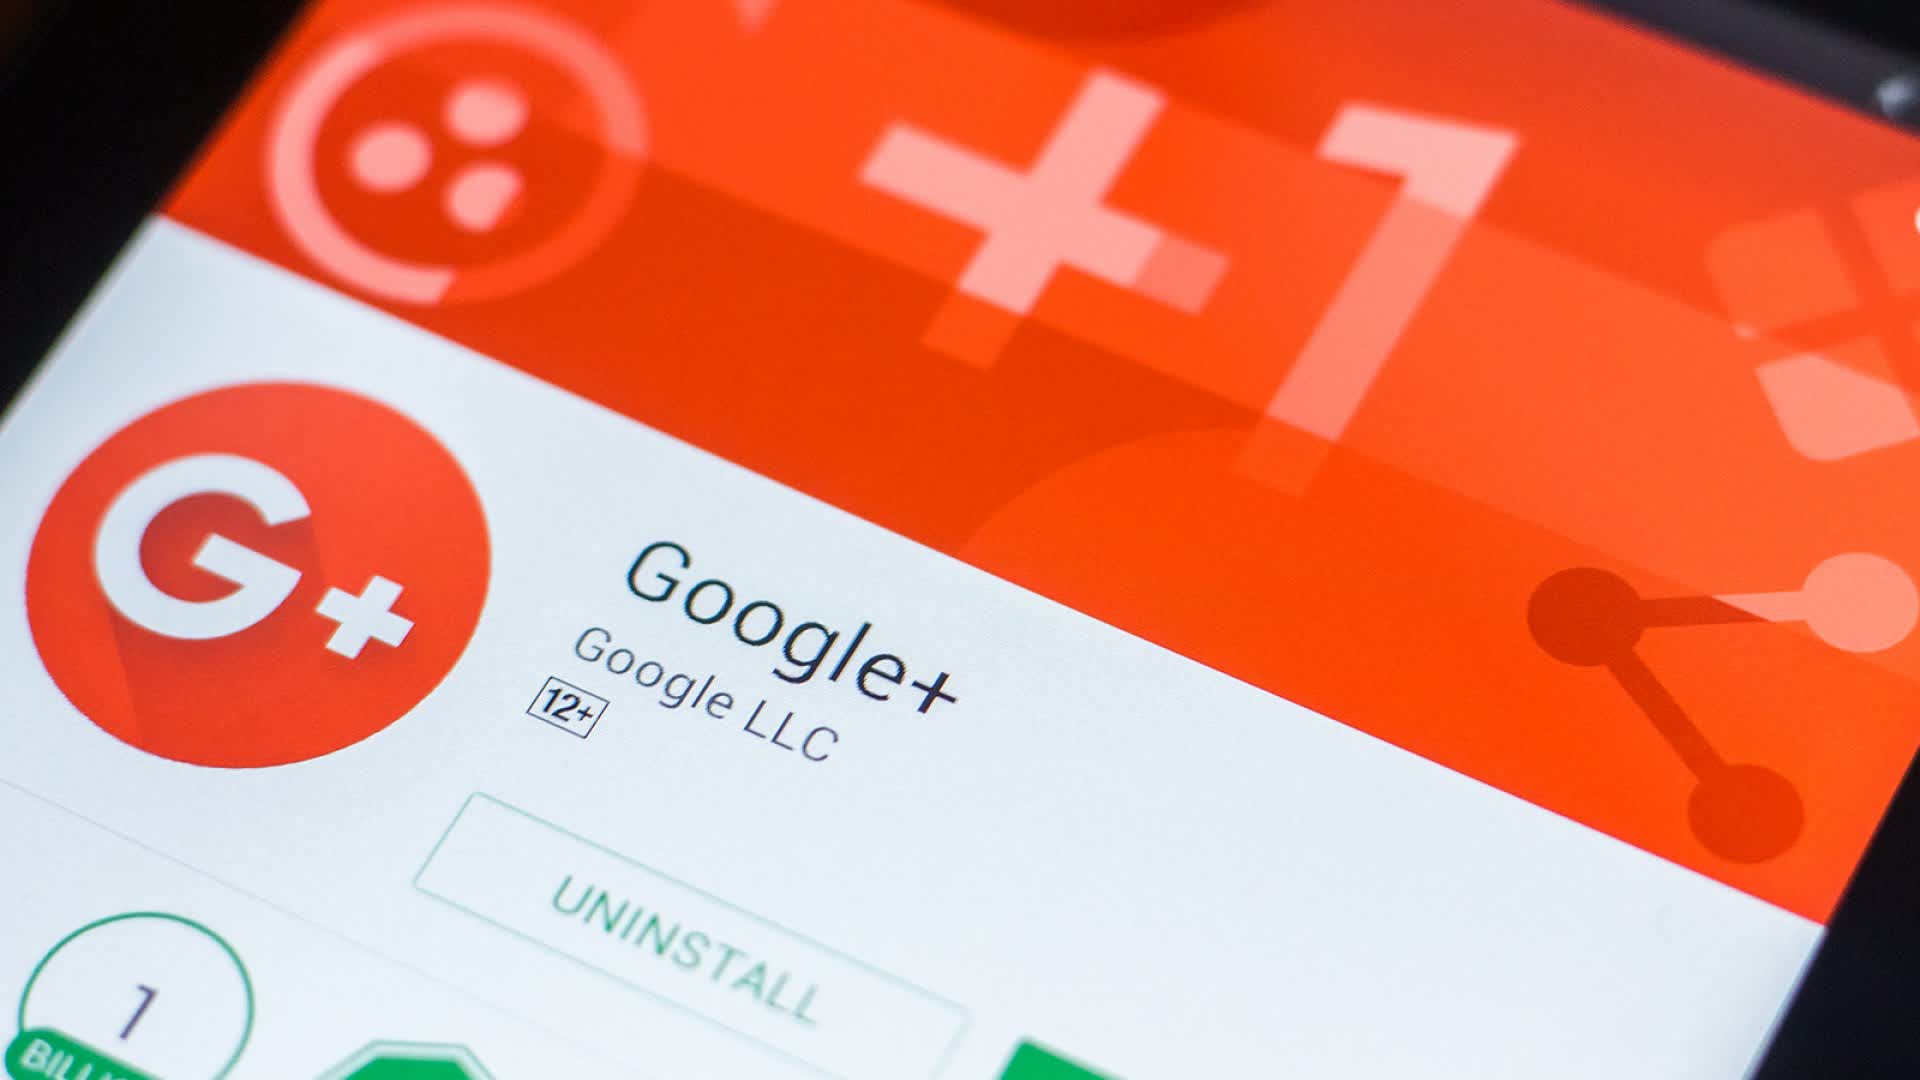 Google+ will shut down again in 2023